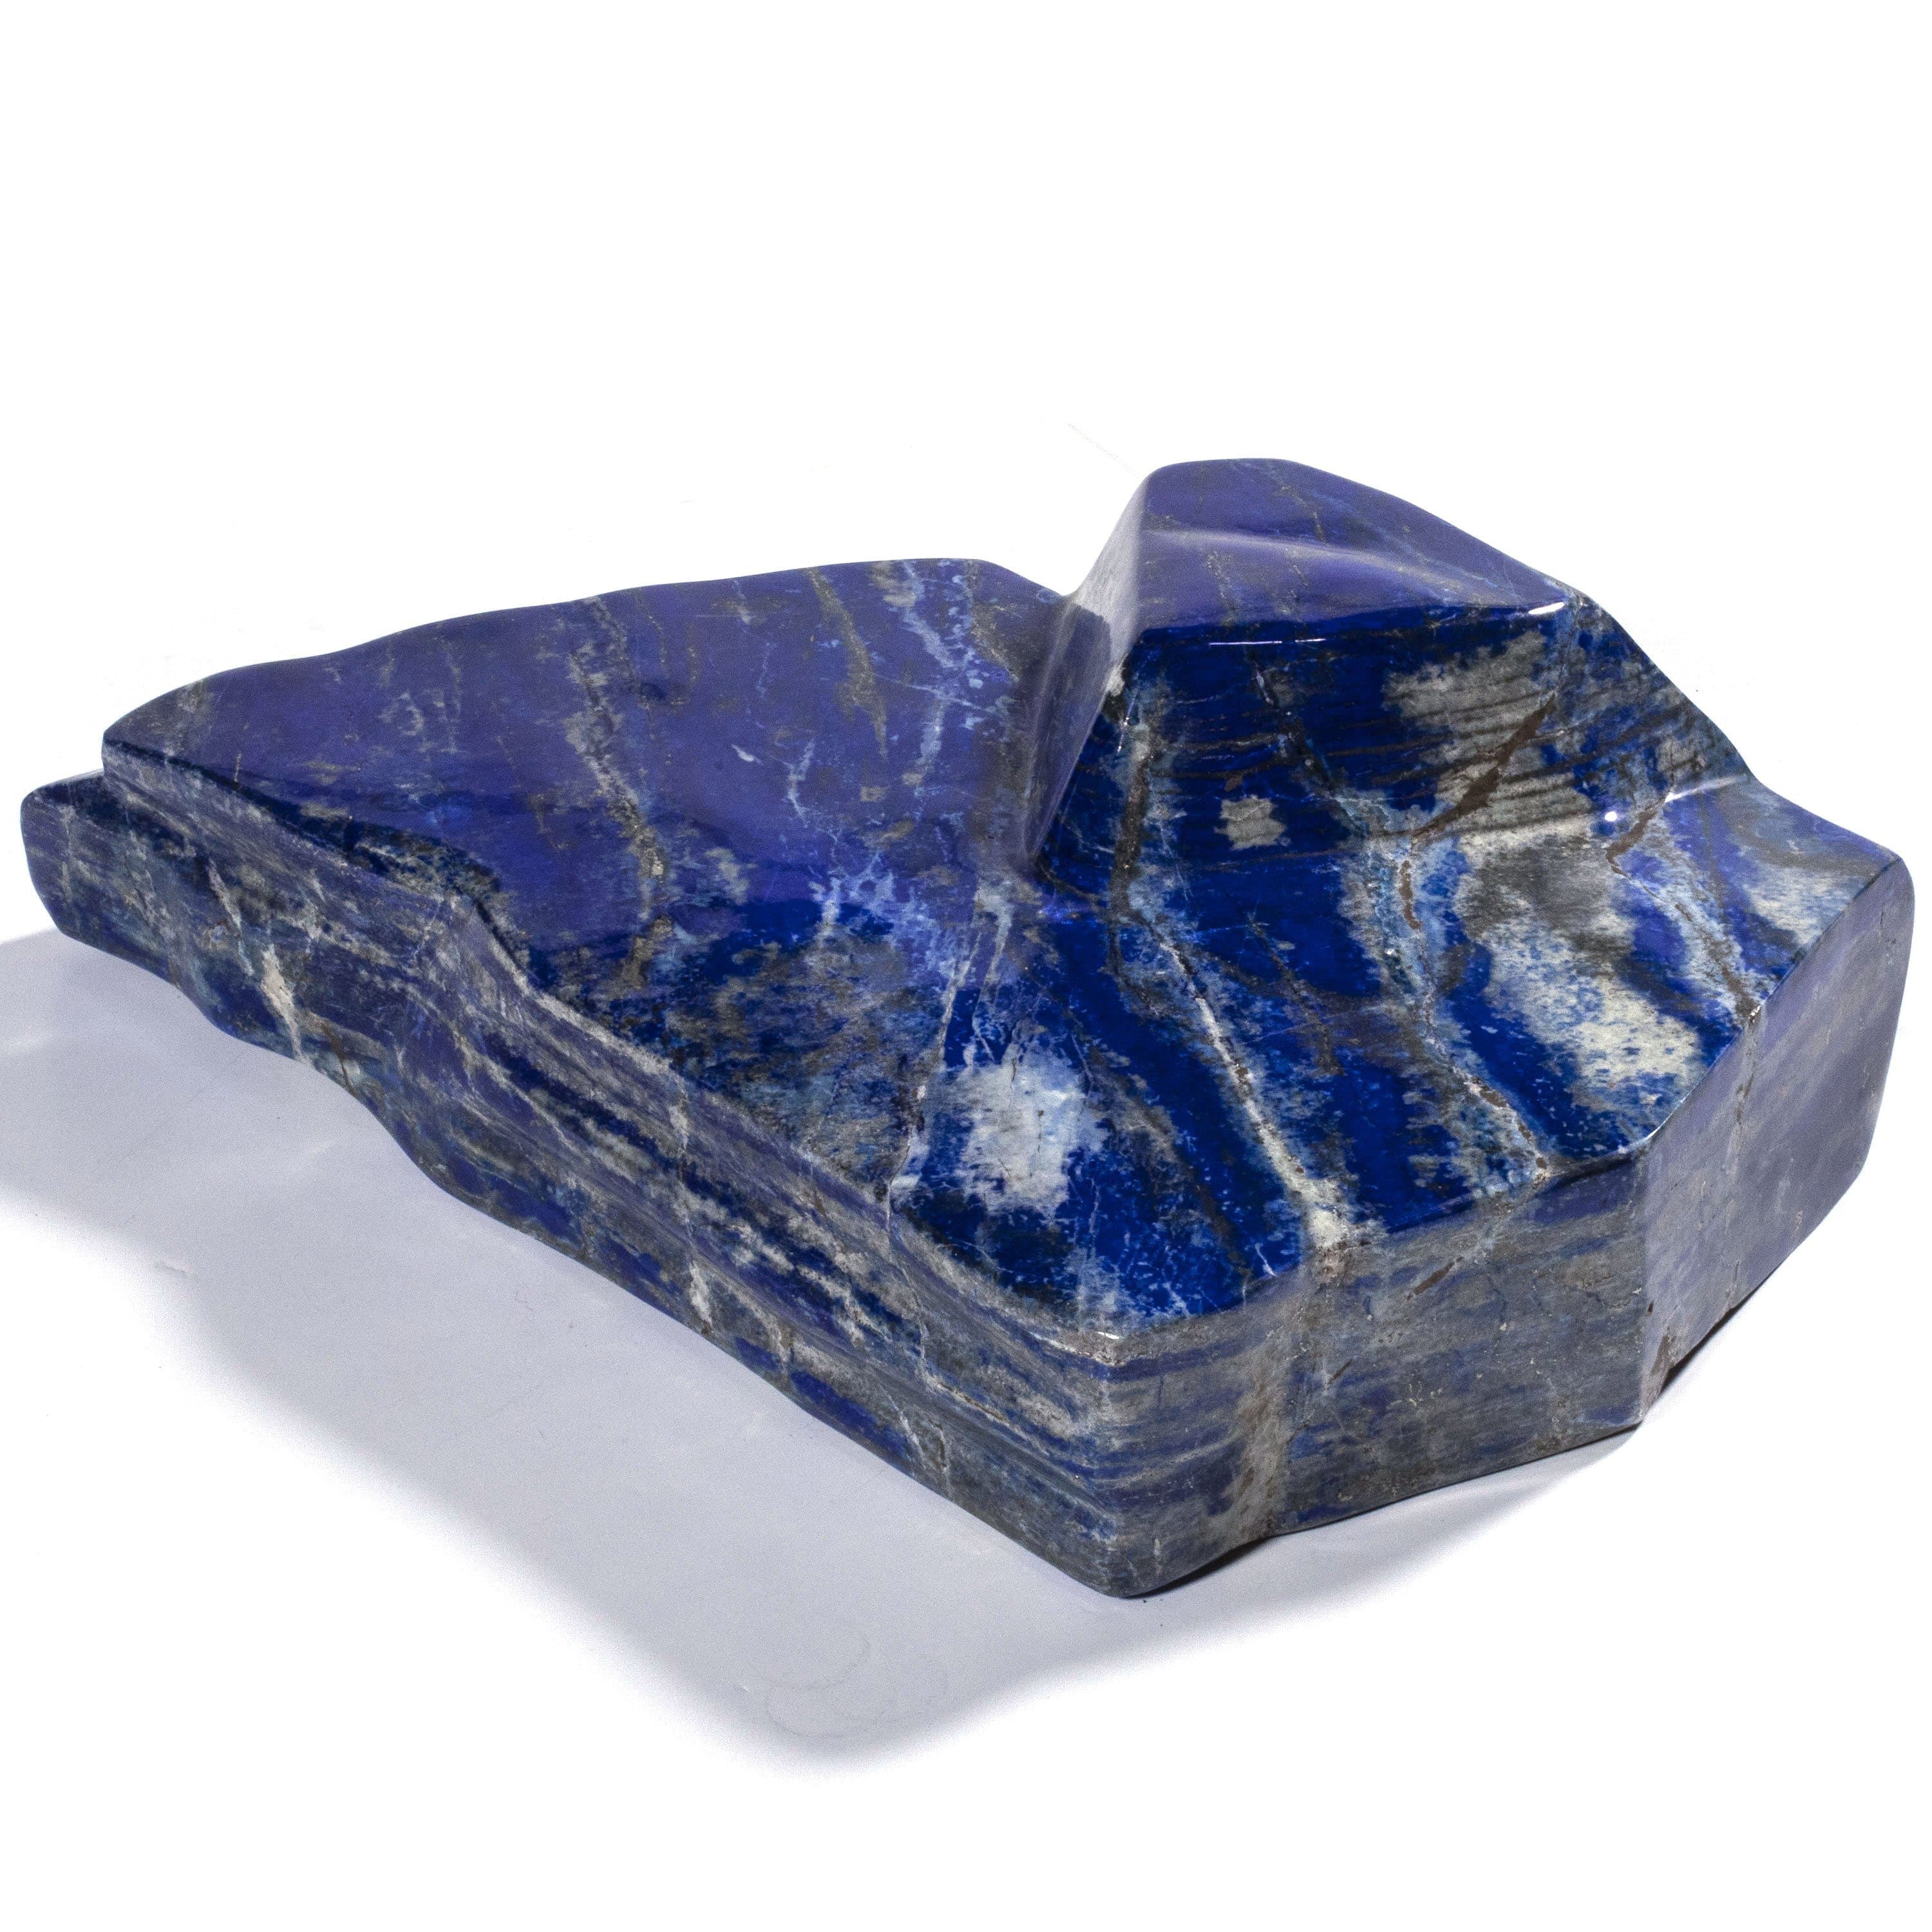 Zenkeeper 1Lb Lapis Lazuli Crystal Stone Natural Raw Stones & Fountain Rocks  for Tumbling, Cabb - Rocks, Fossils & Minerals, Facebook Marketplace